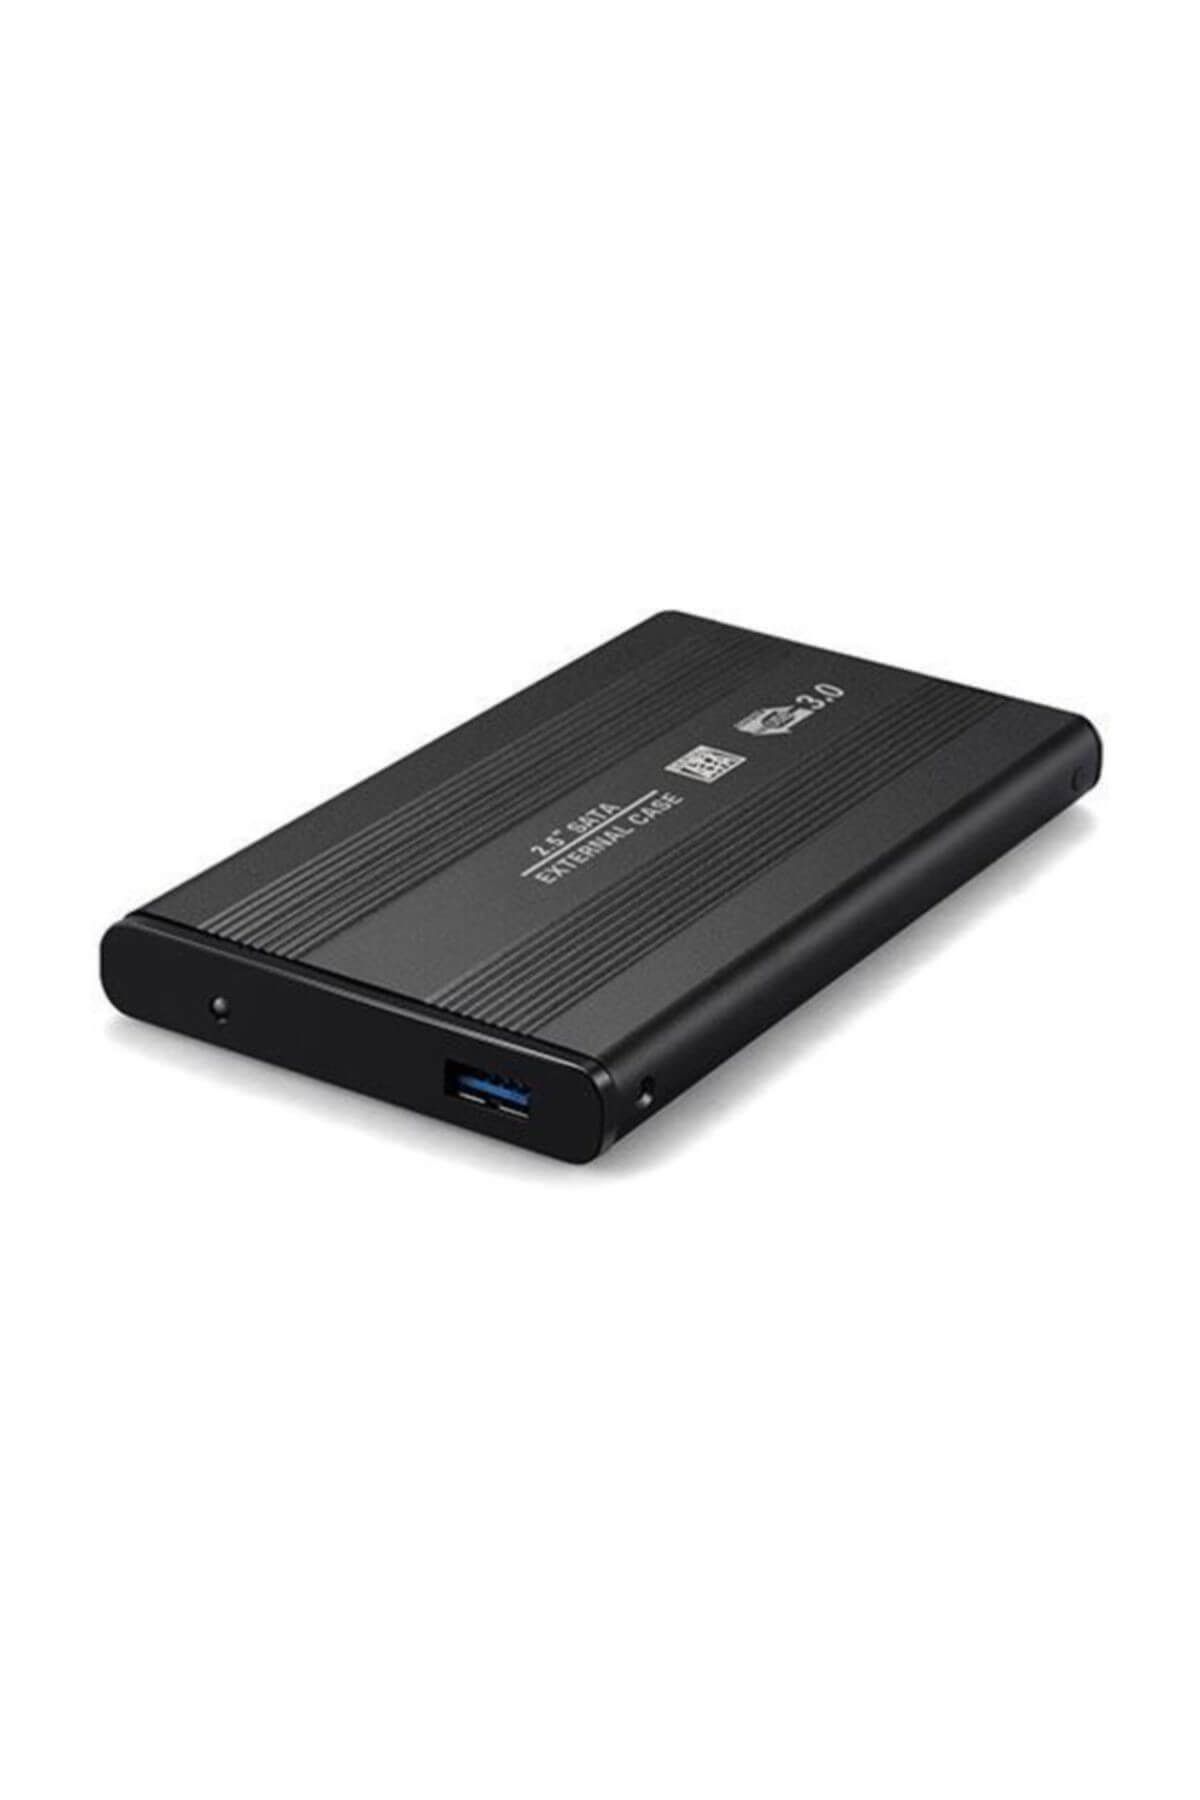 Everest Hytech HY-HDC23 2.5" USB 3.0 SATA Harddisk Kutusu Siyah